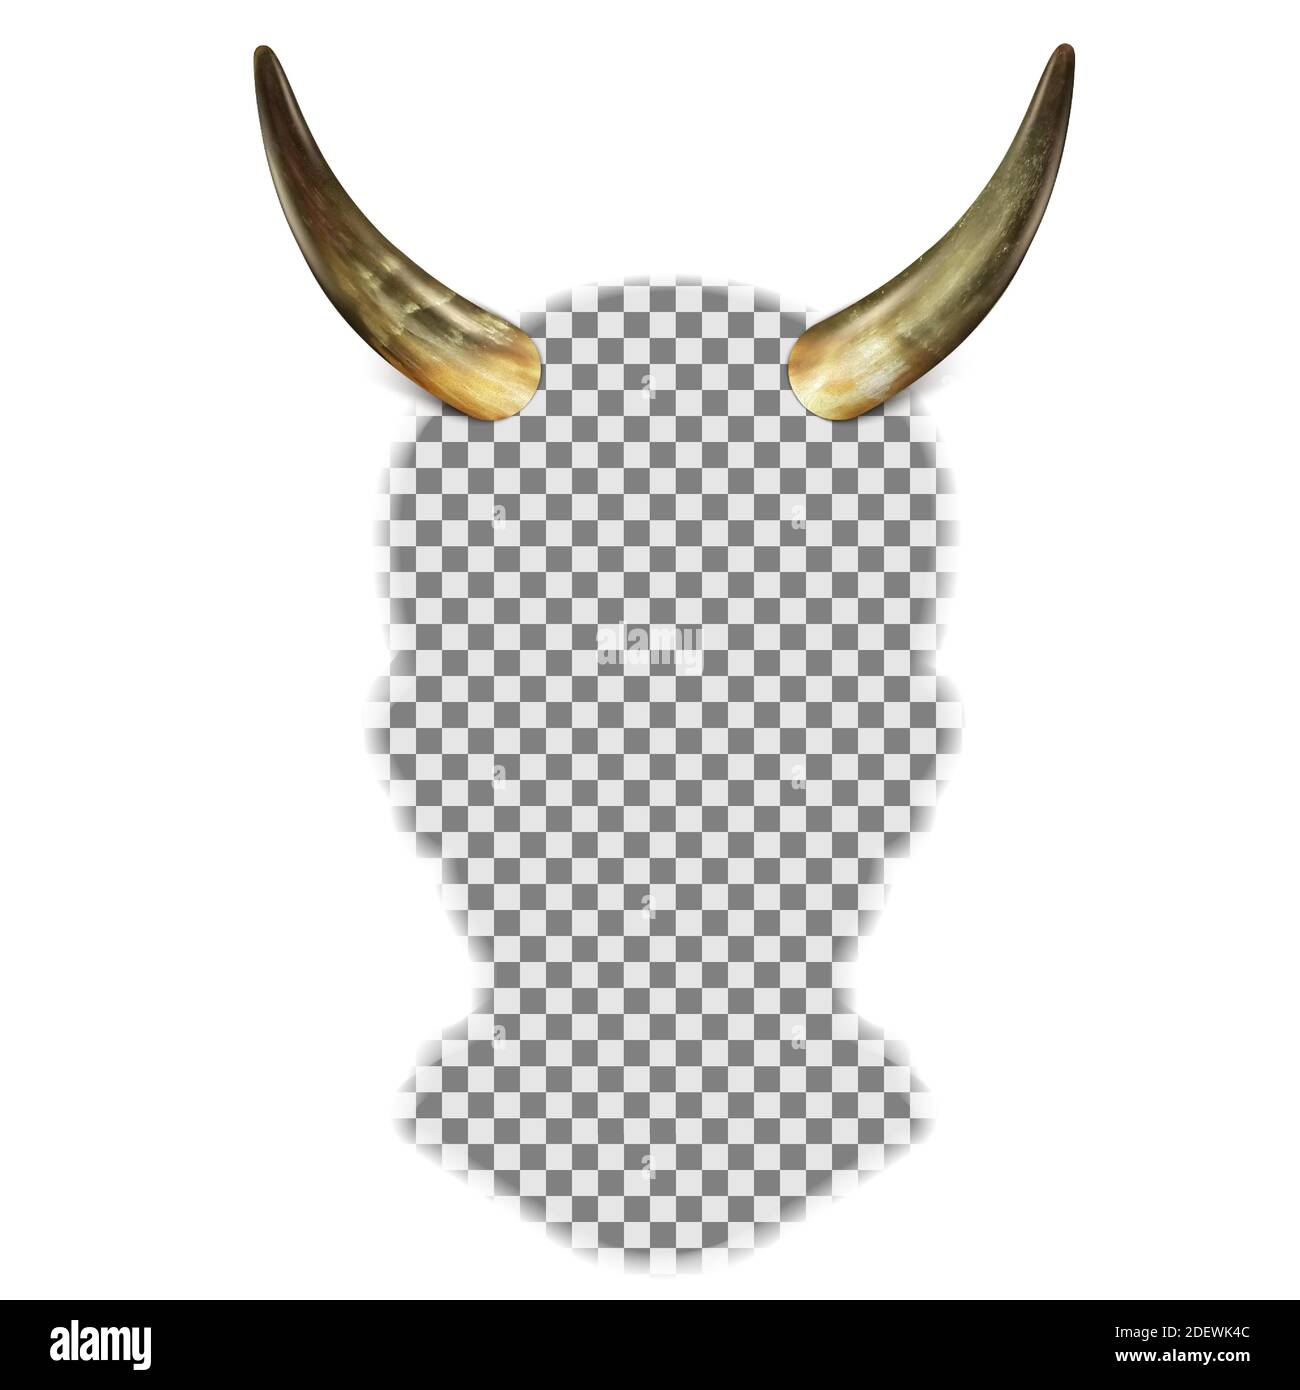 Horns vectors -Fotos und -Bildmaterial in hoher Auflösung – Alamy